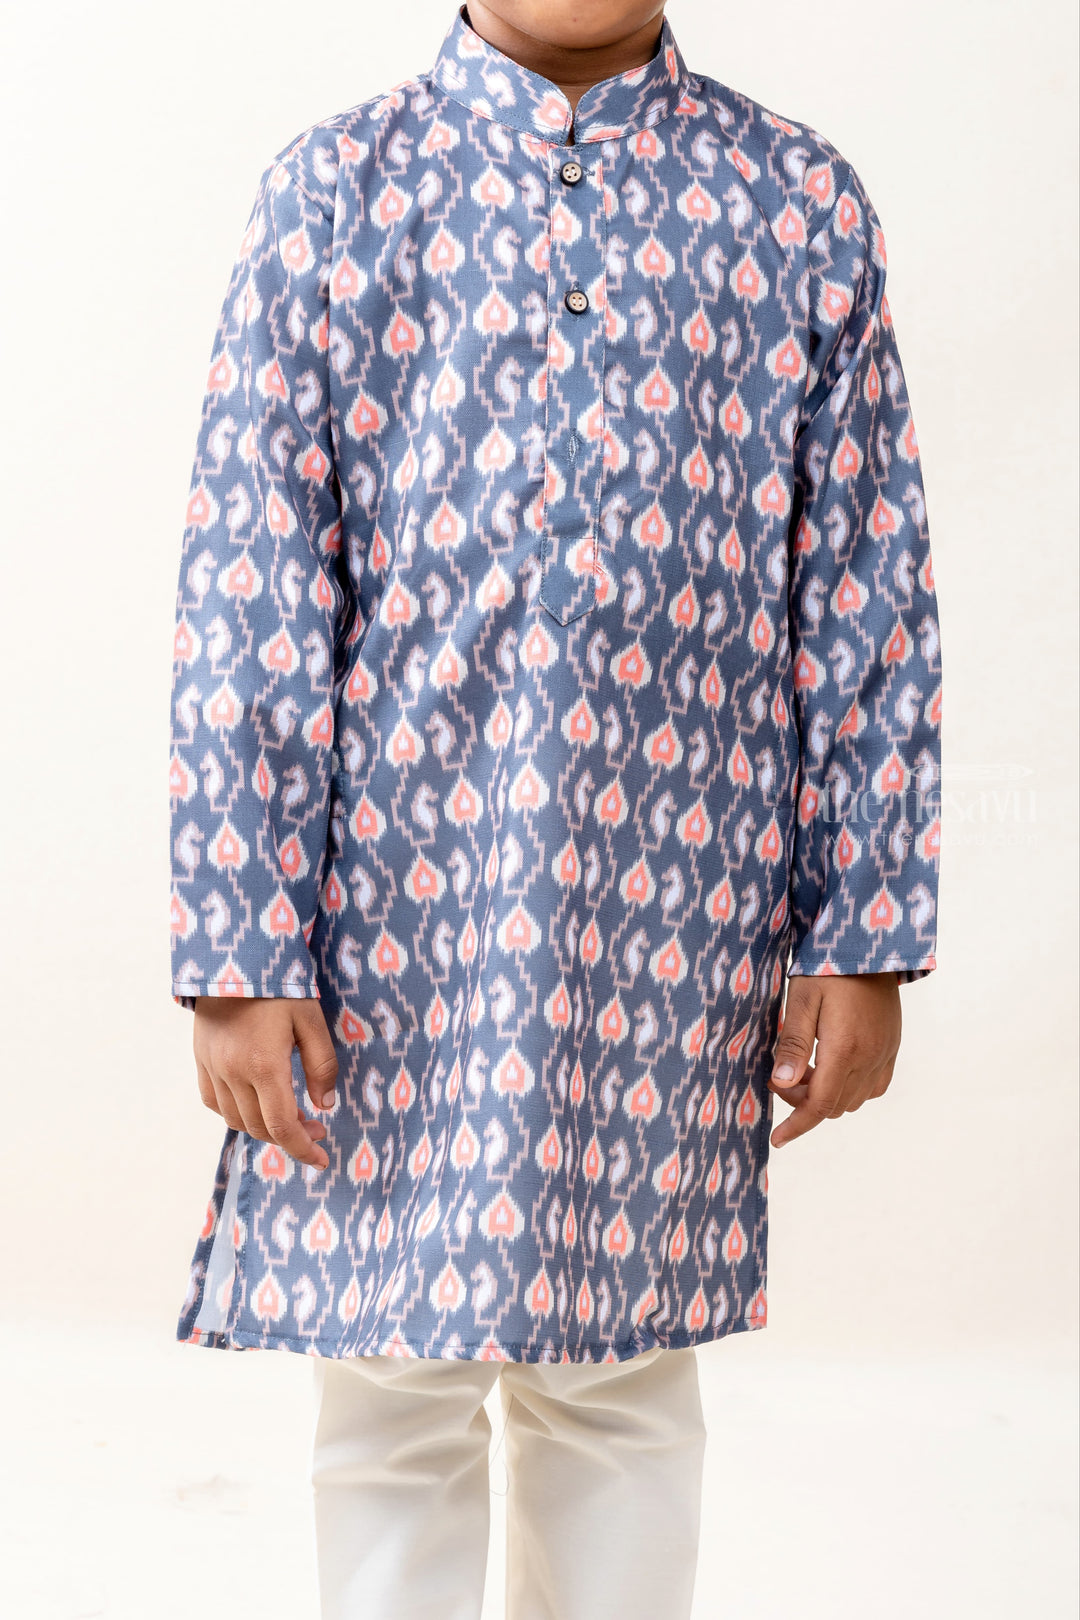 The Nesavu Ethnic Sets Wiggle and Waggle Print - Deep Blue Shirt Dueted With White Pants psr silks Nesavu